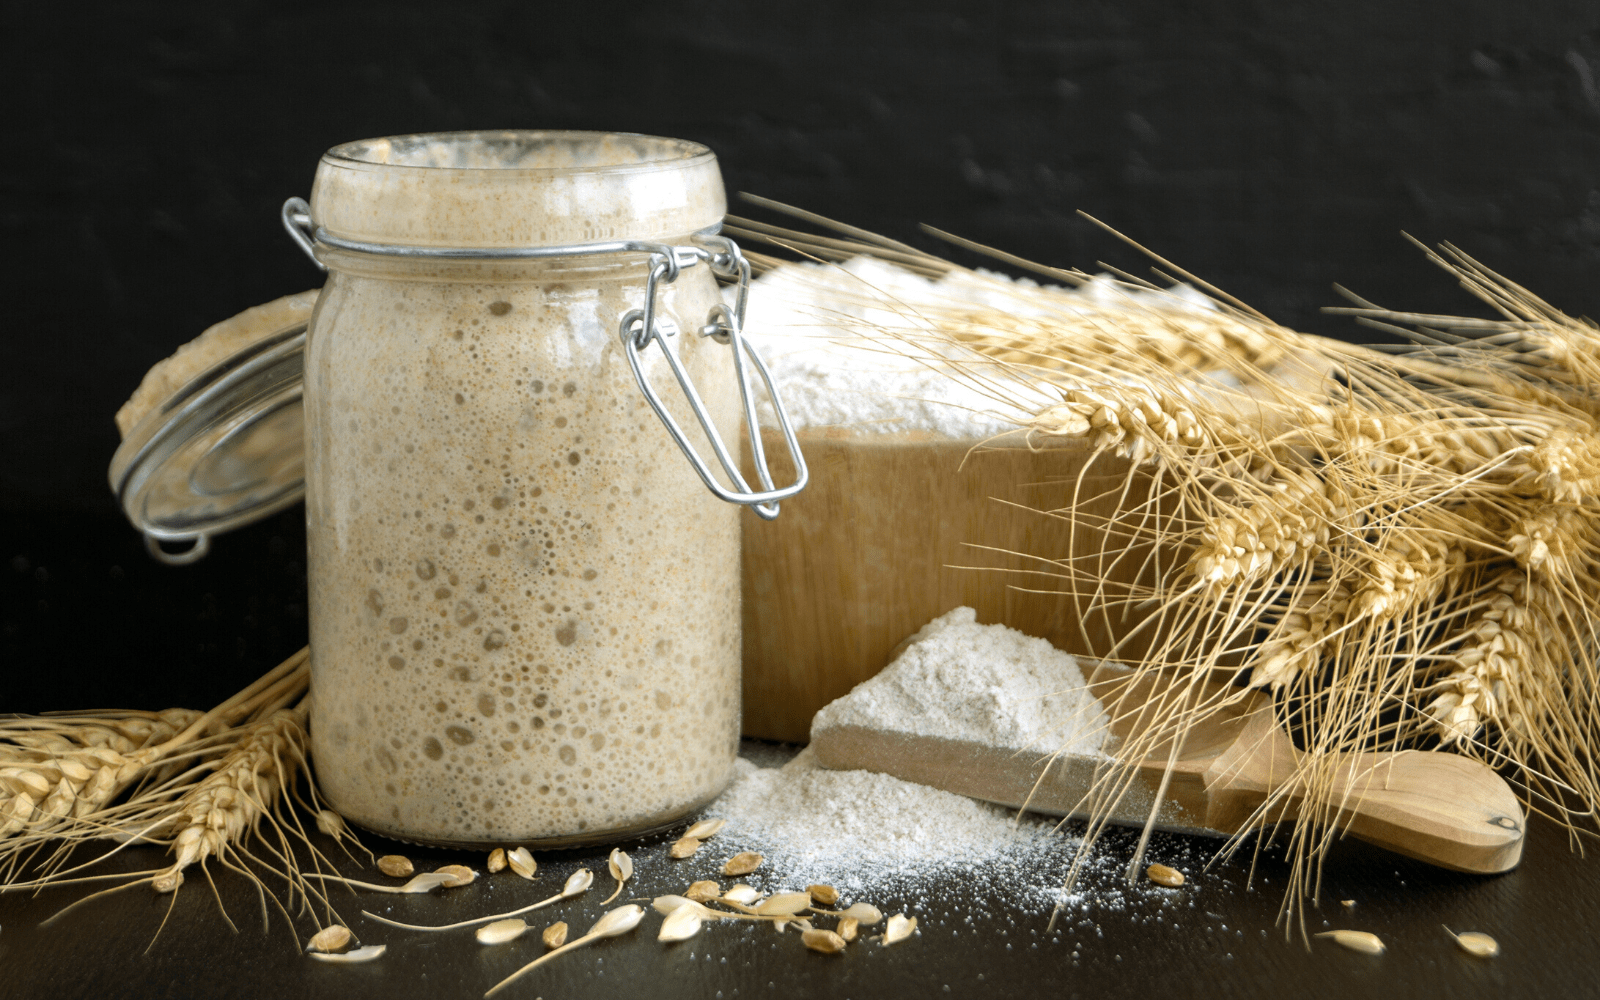 A jar of active rye flour sourdough starter